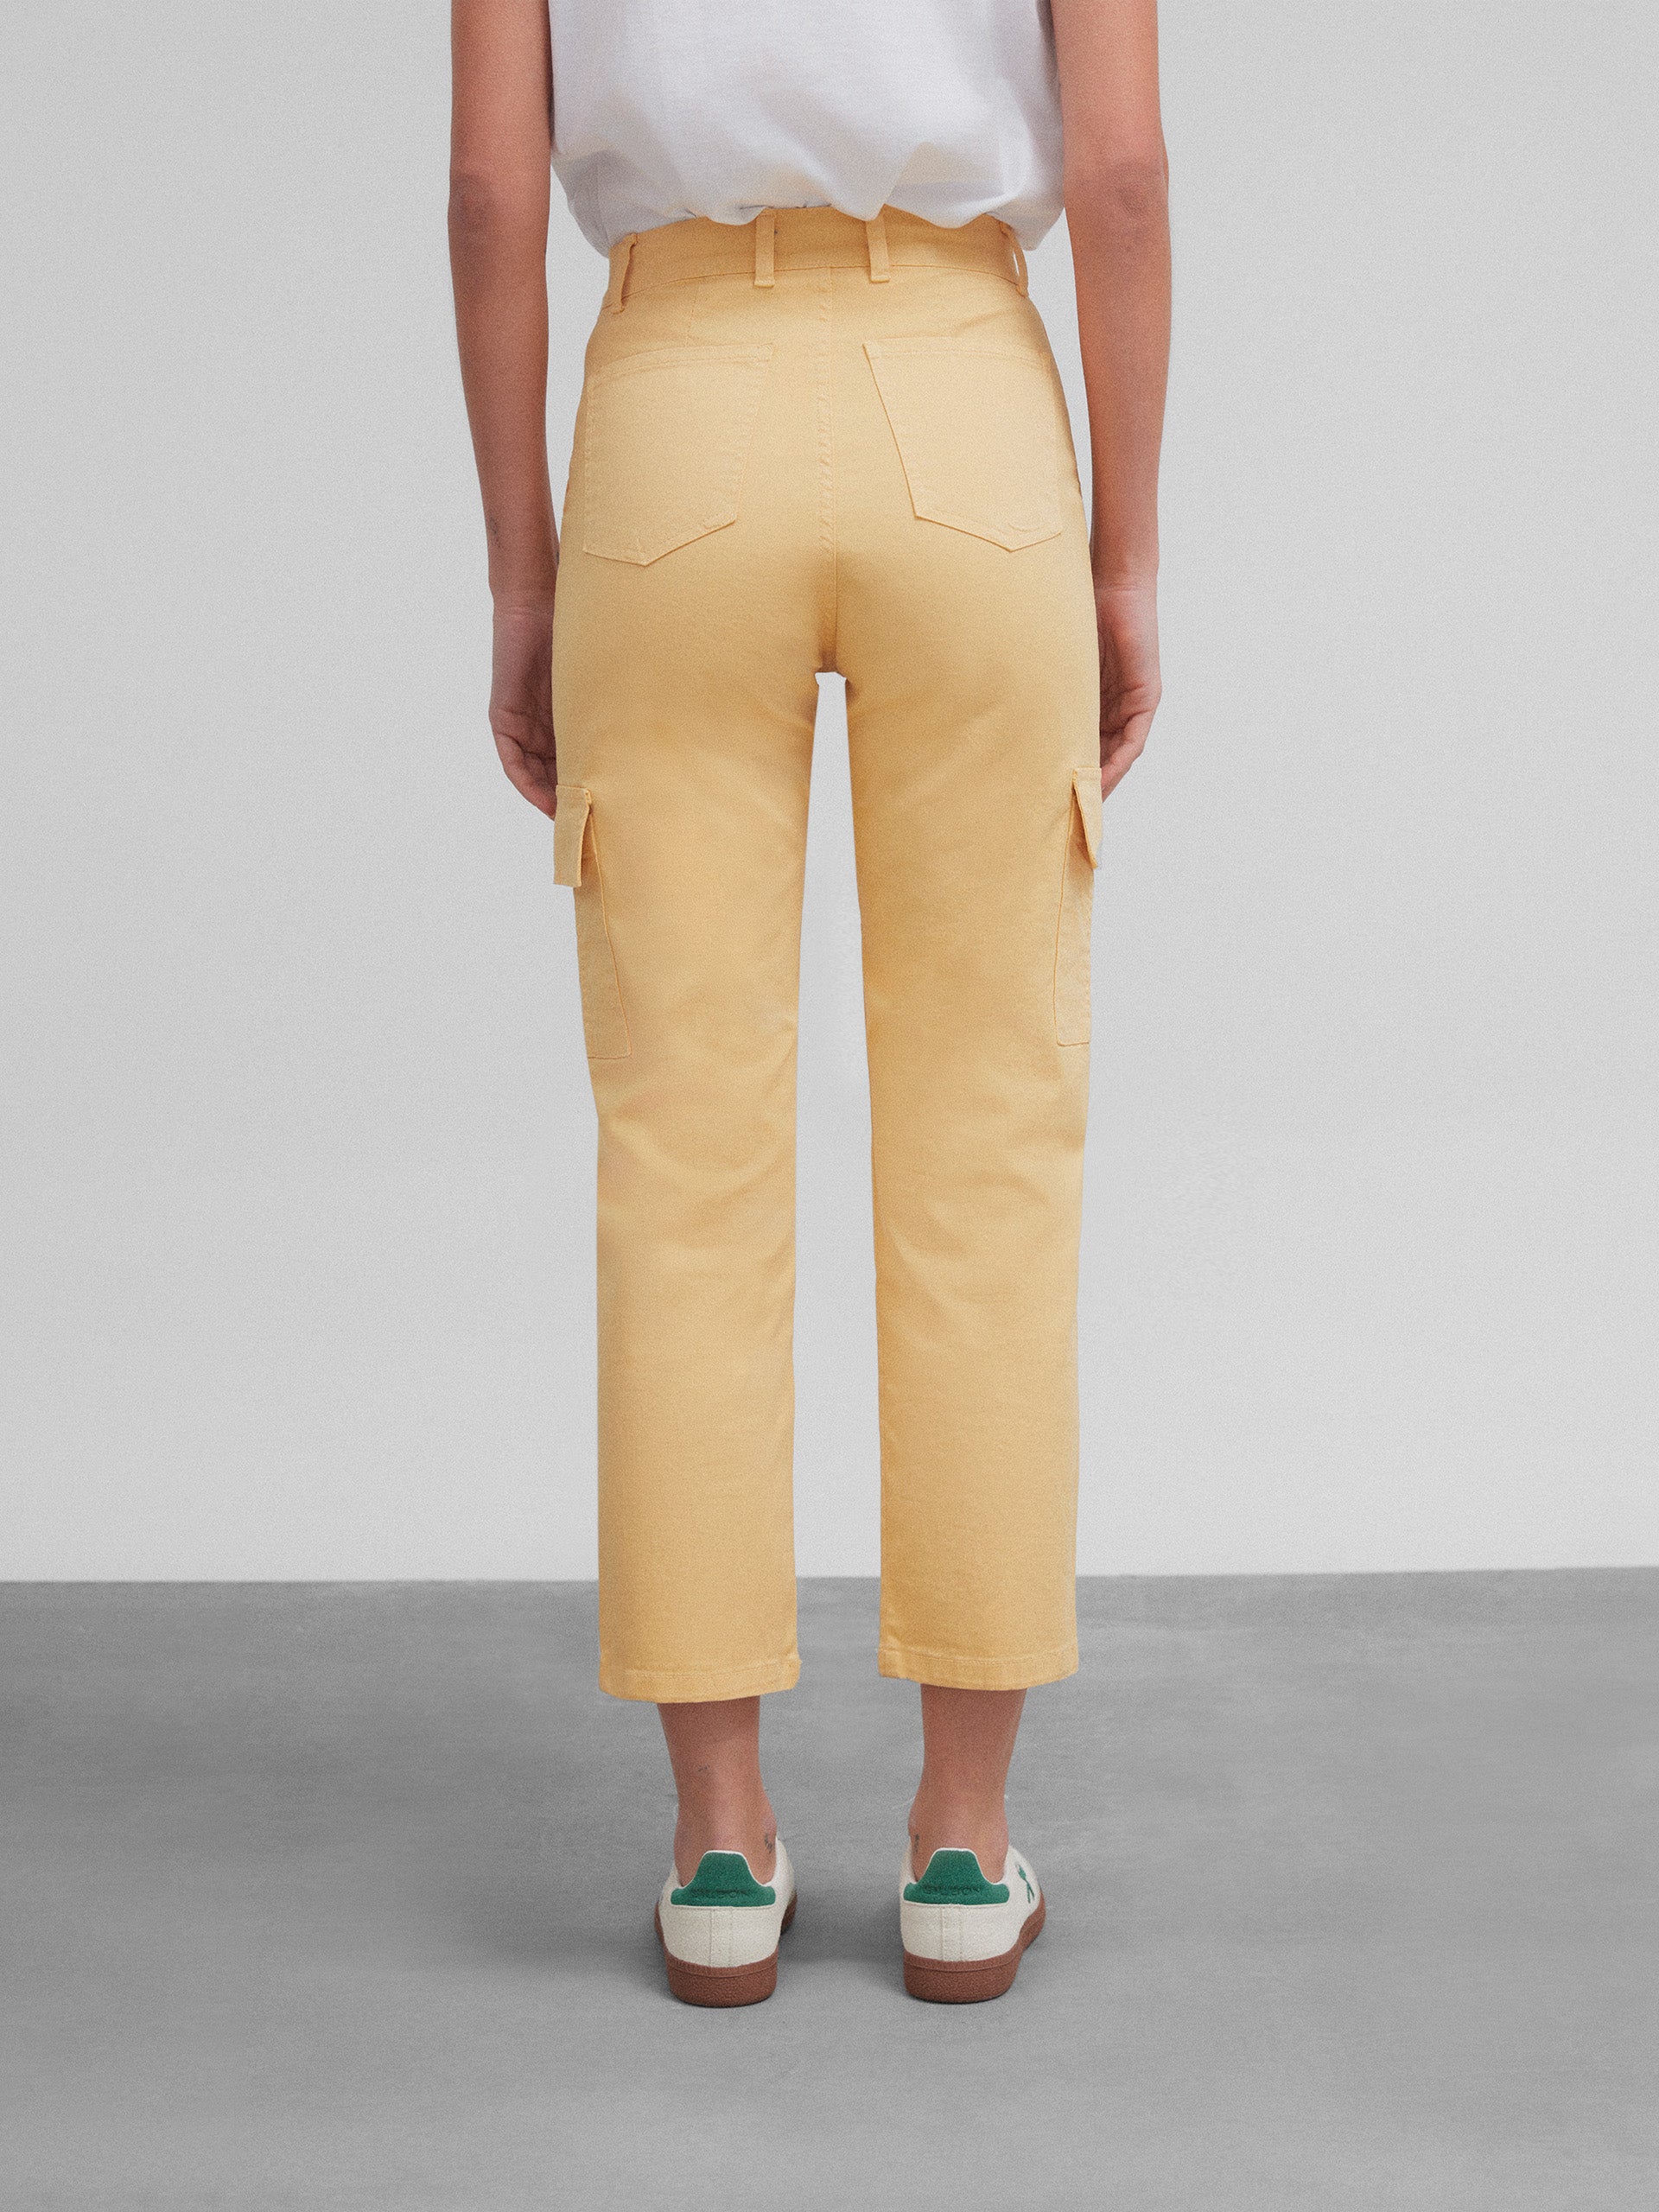 Pantalon femme cargo jaune en jean